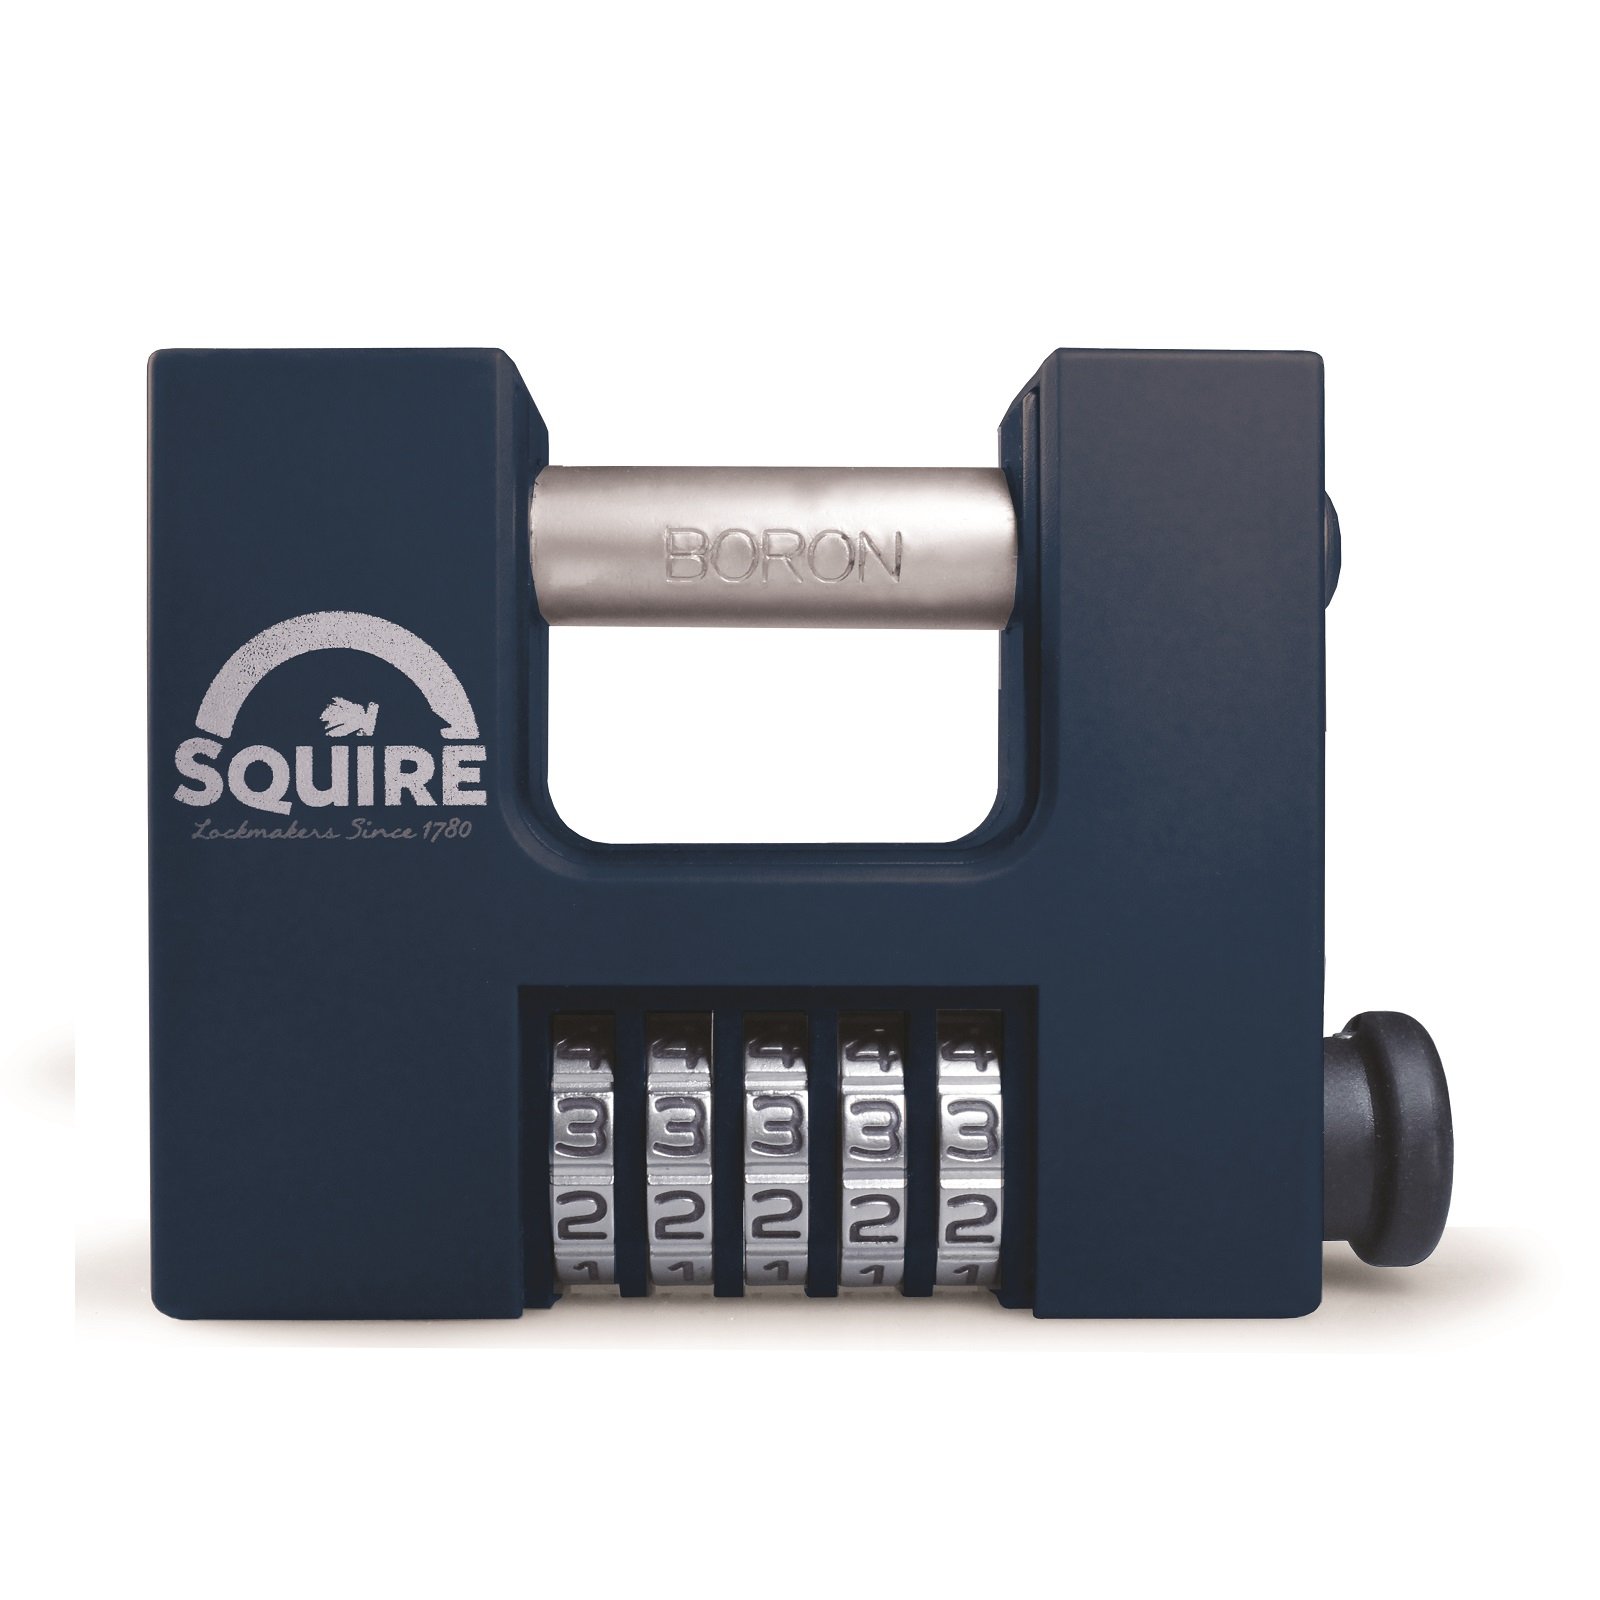 Squire CBW85 Hi-Security Combination Padlock 85mm